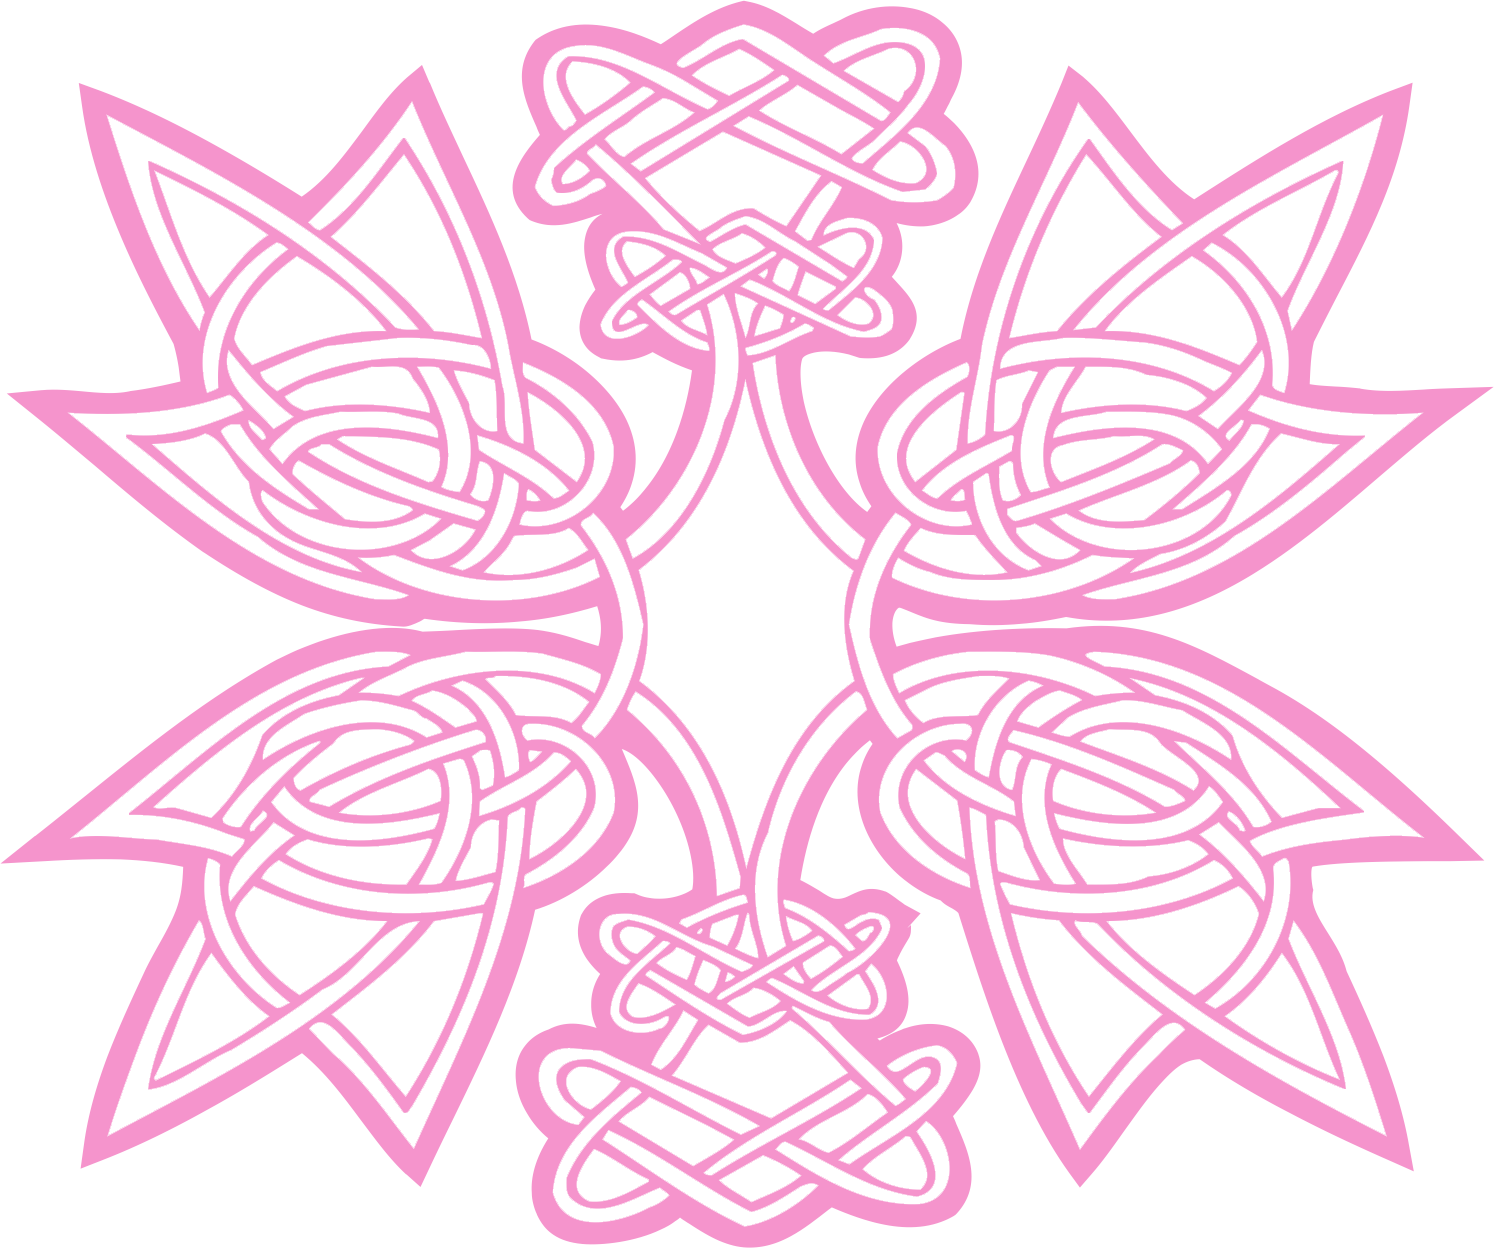 Celtic Knot Floral Ornament Vector